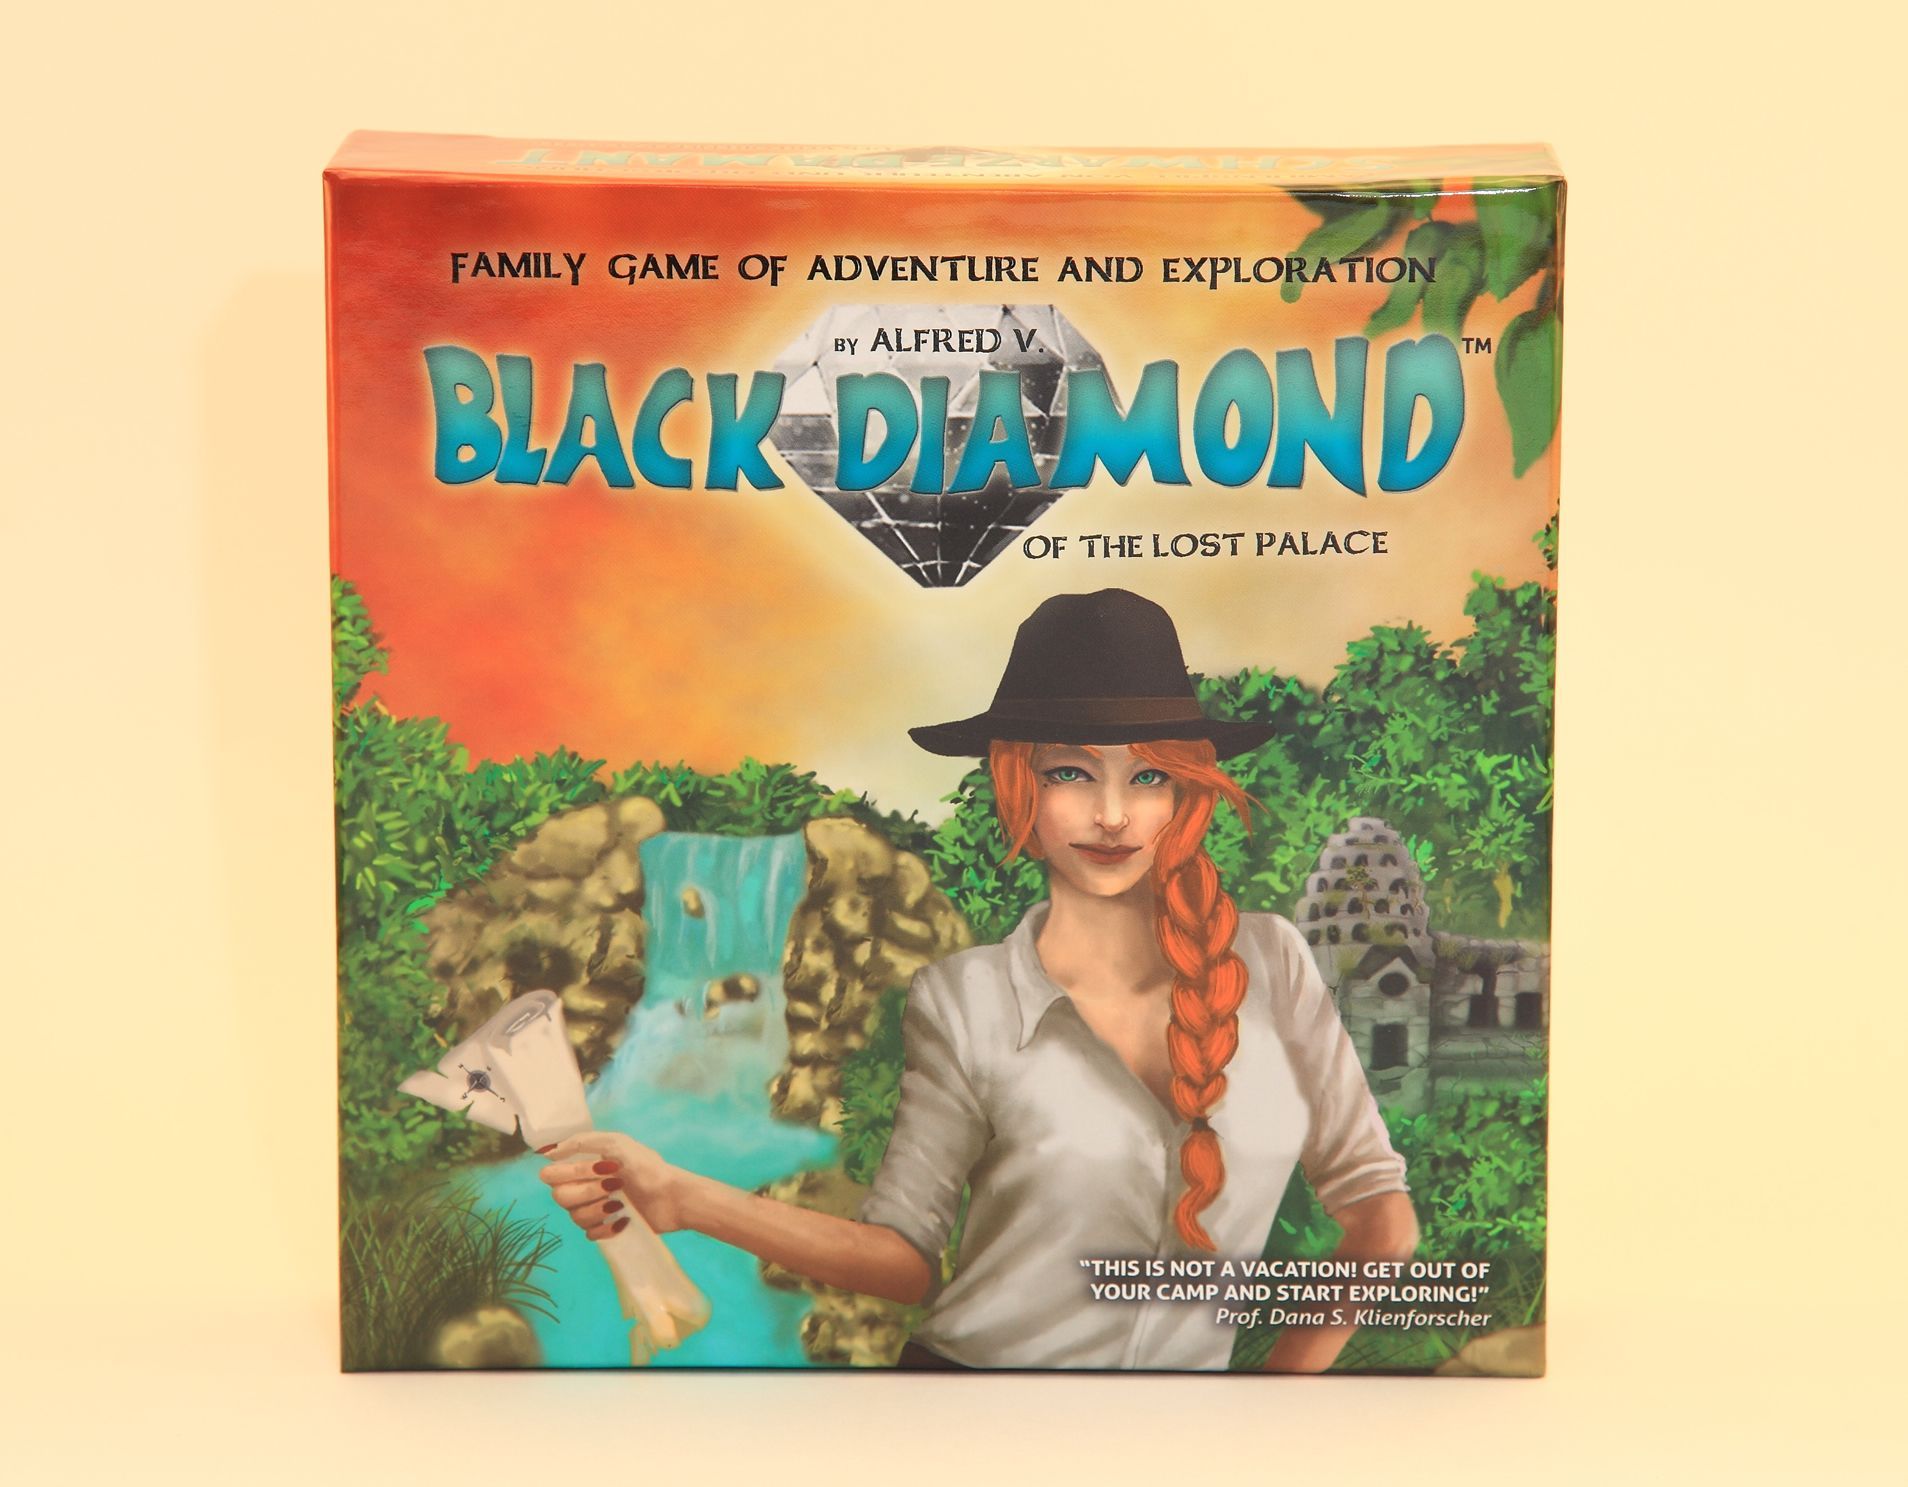 Black Diamond of the Lost Palace